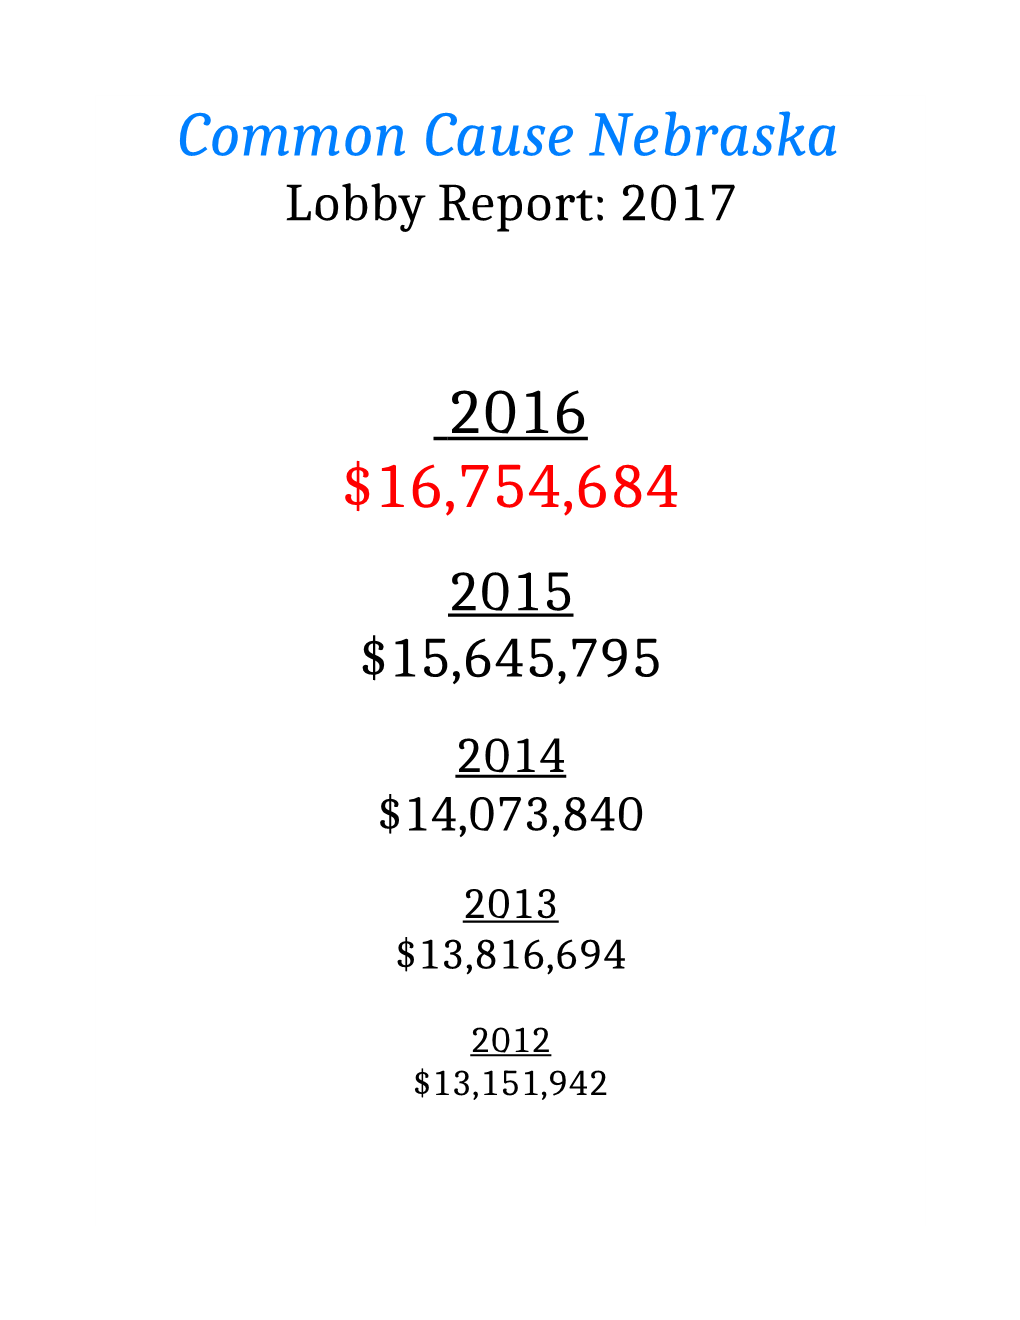 Common Cause Nebraska 2016 $16,754,684